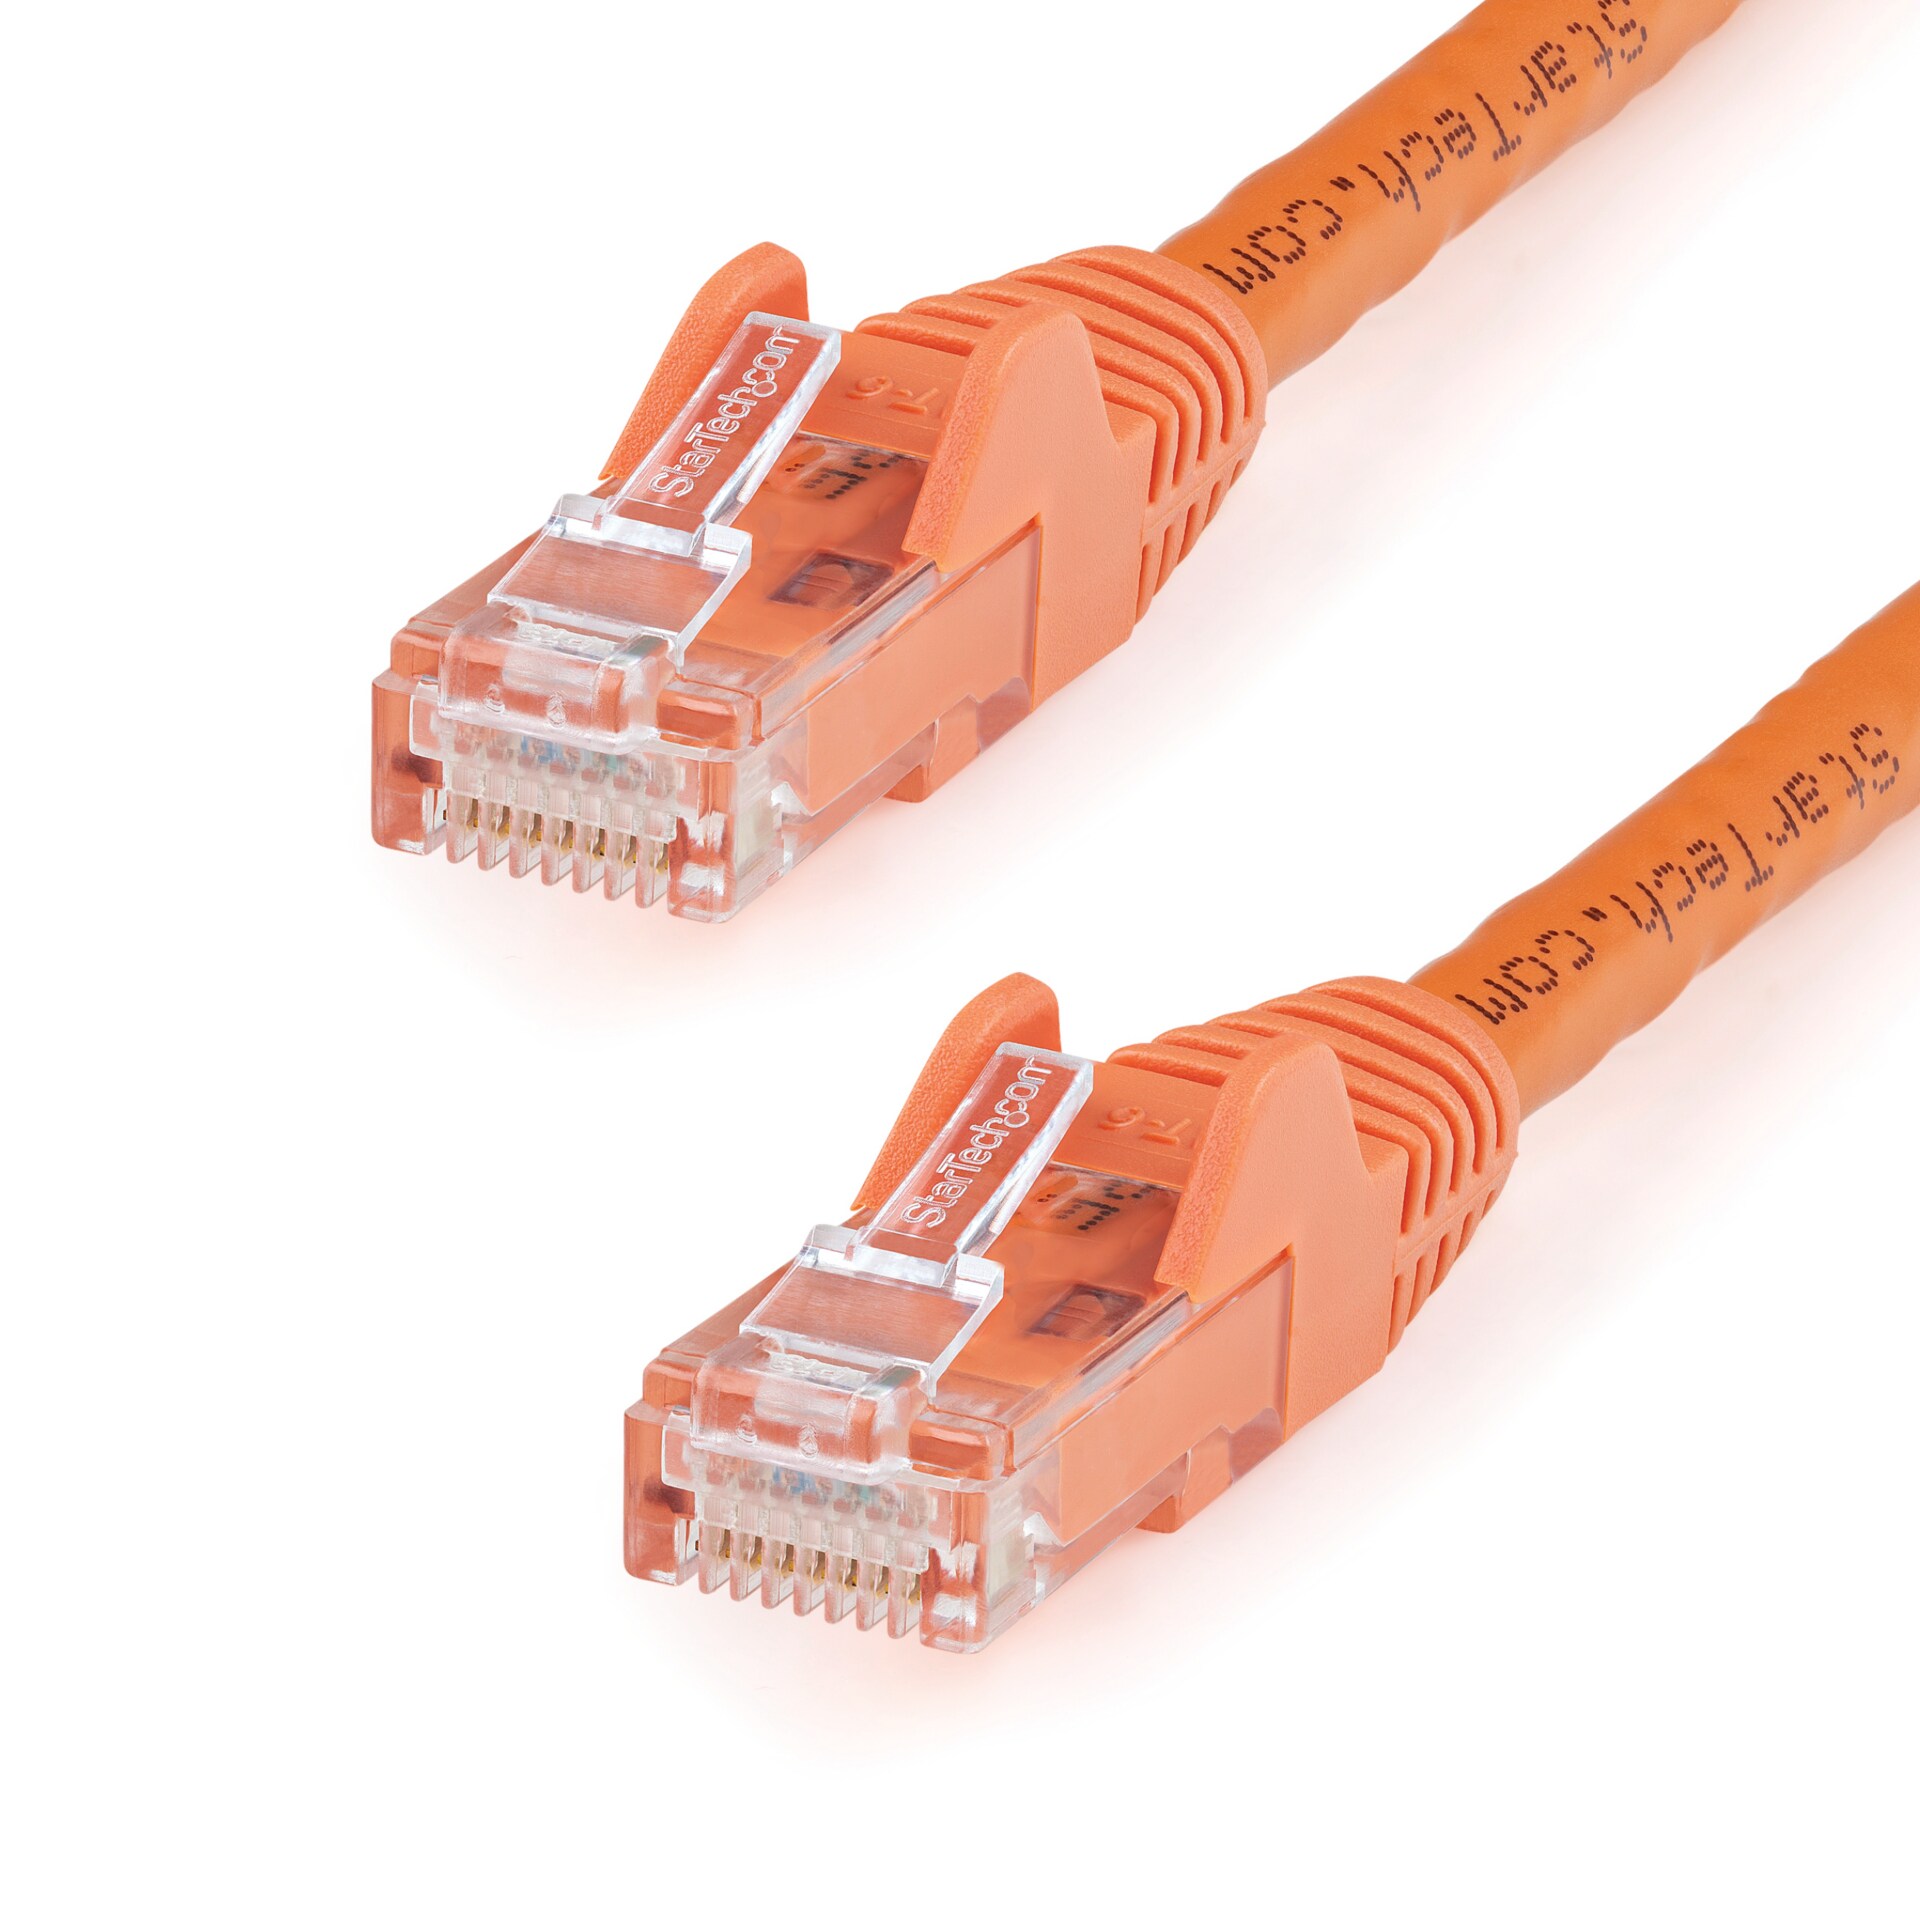 StarTech.com 5ft CAT6 Ethernet Cable Orange Snagless UTP CAT 6 Gigabit Cord/Wire 100W PoE 650MHz